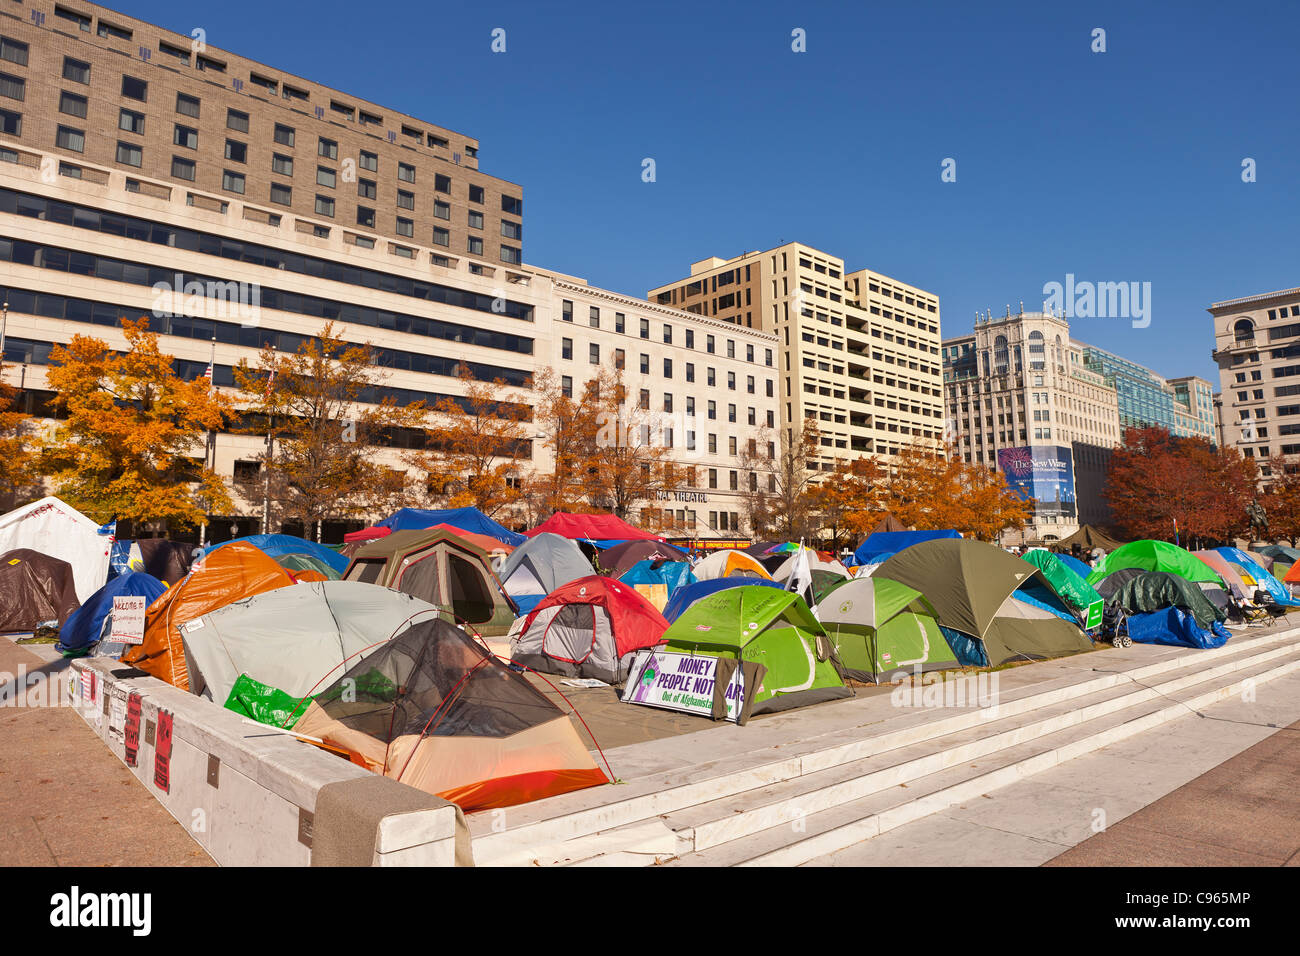 WASHINGTON, DC USA - Occupy Washington protest camp at Freedom Plaza. Stock Photo